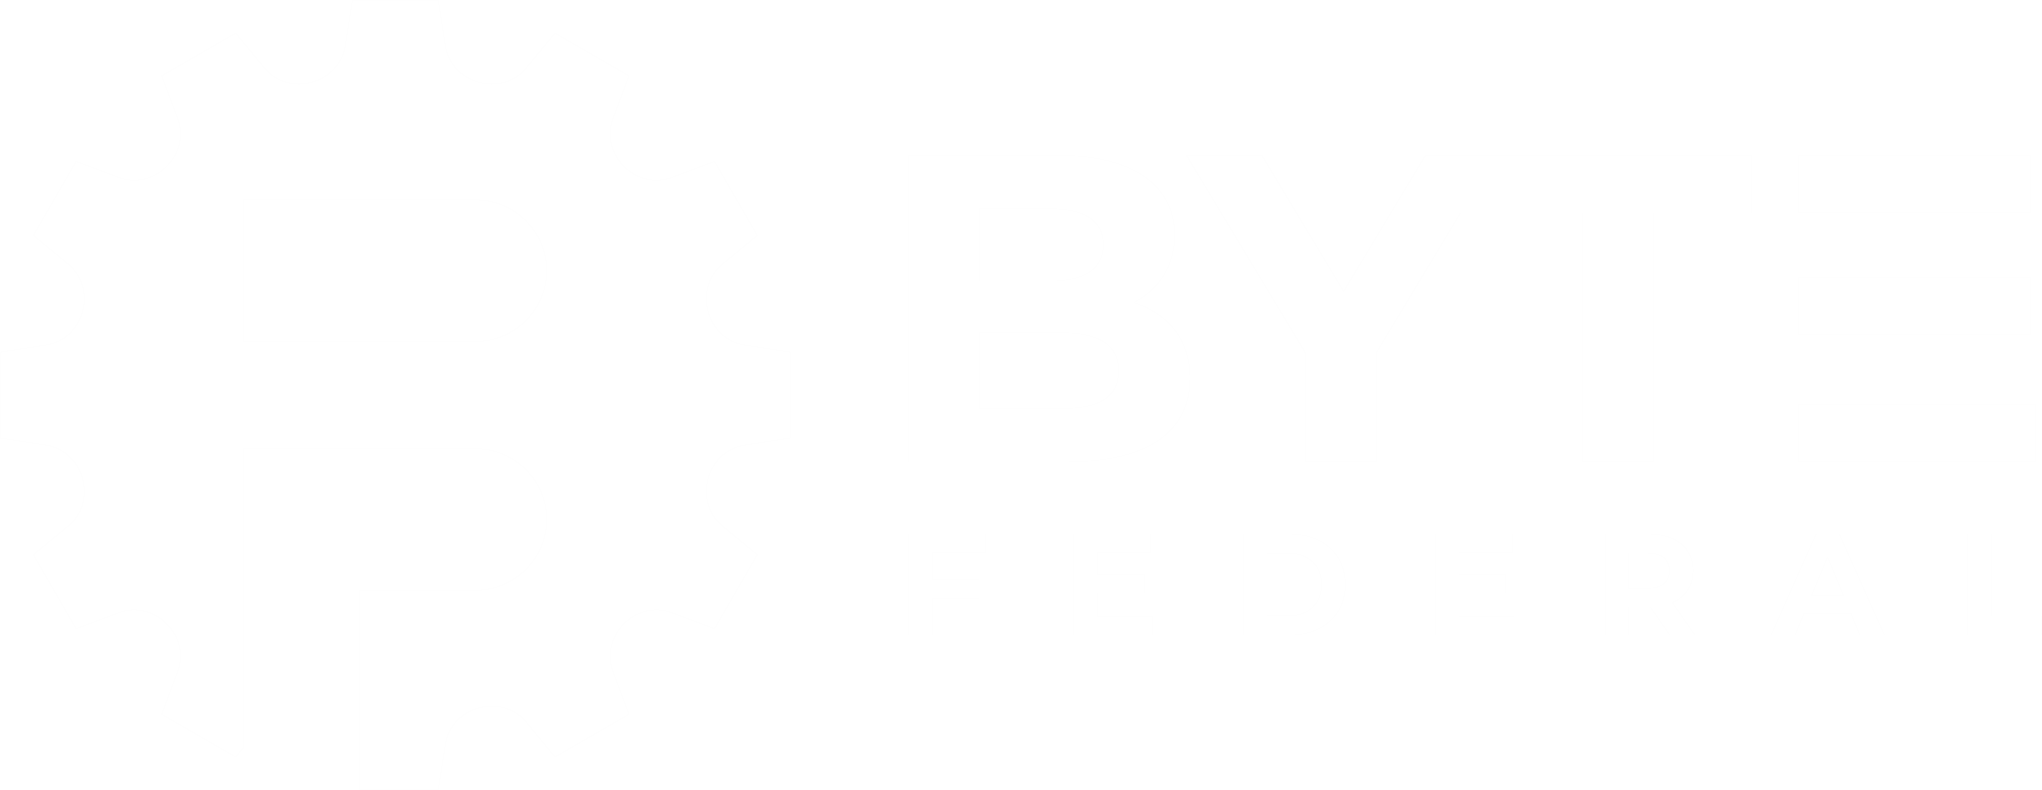 ByteFederal Member Portal